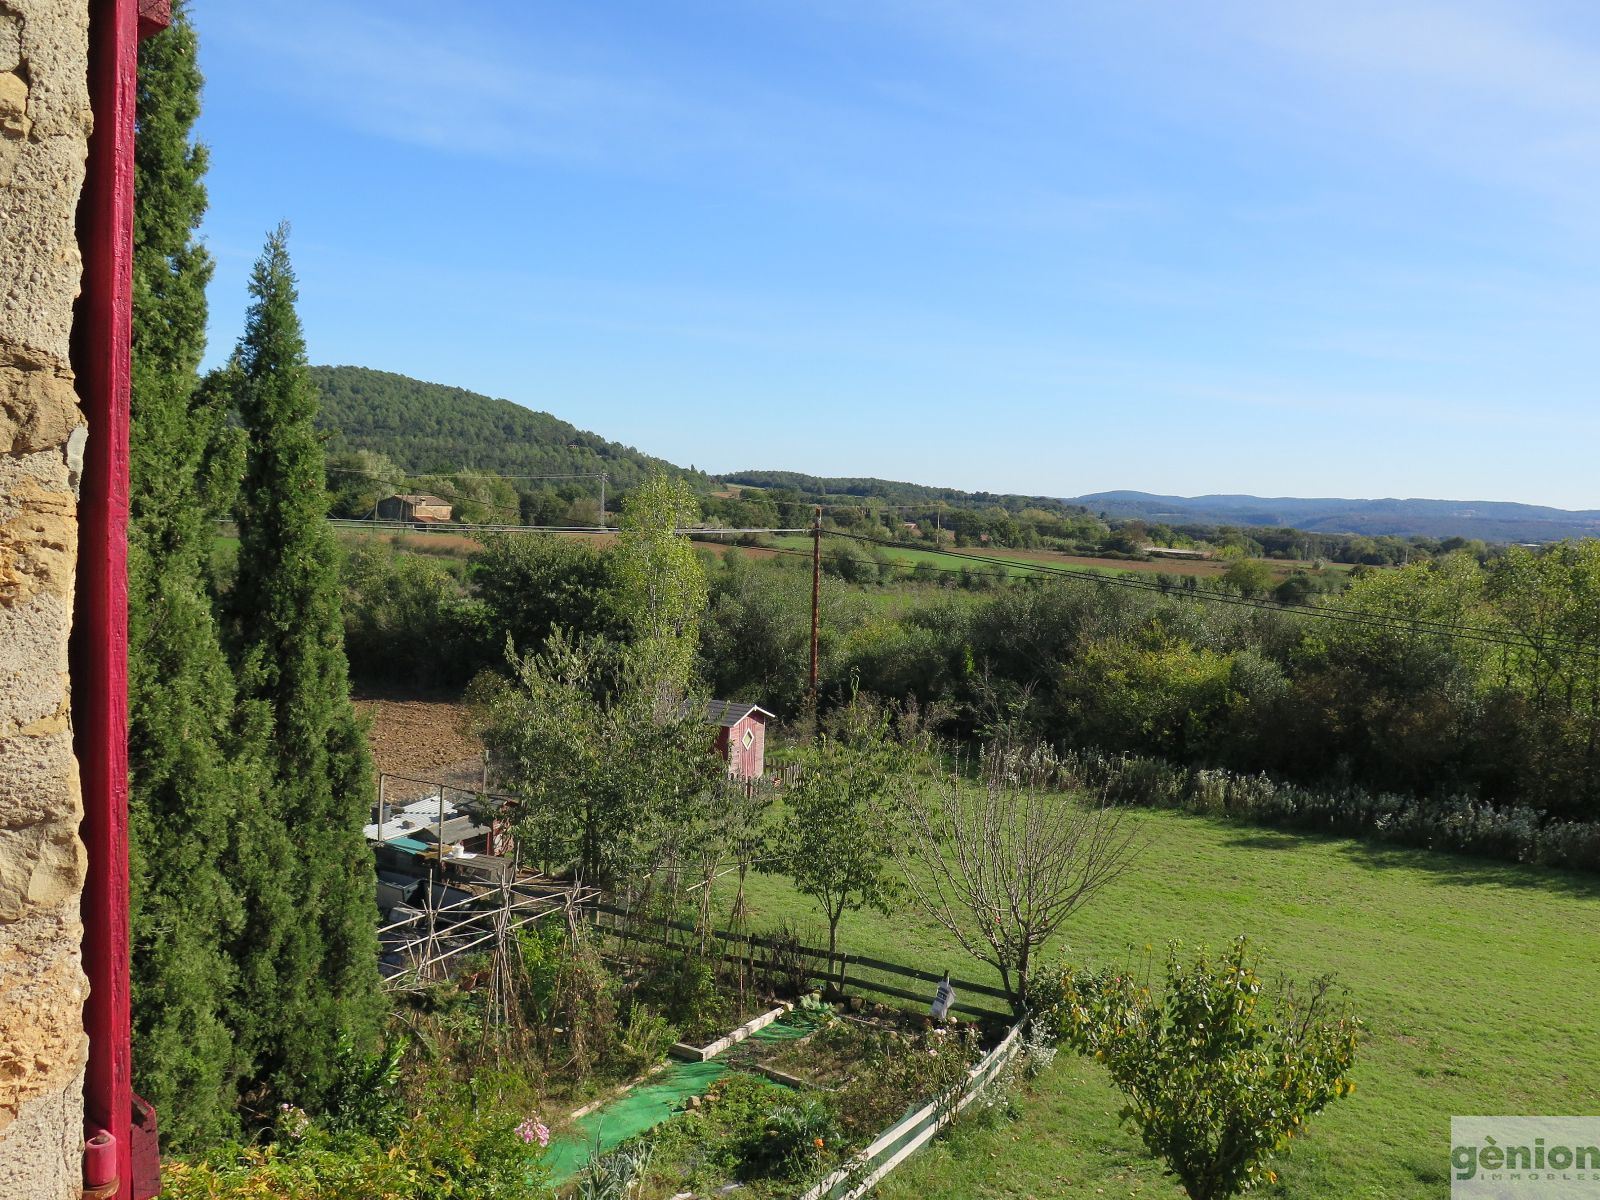 FARMHOUSE IN MAIÀ DE MONTCAL, IN THE BOUNDARY BETWEEN LA GARROTXA AND ALT EMPORDÀ